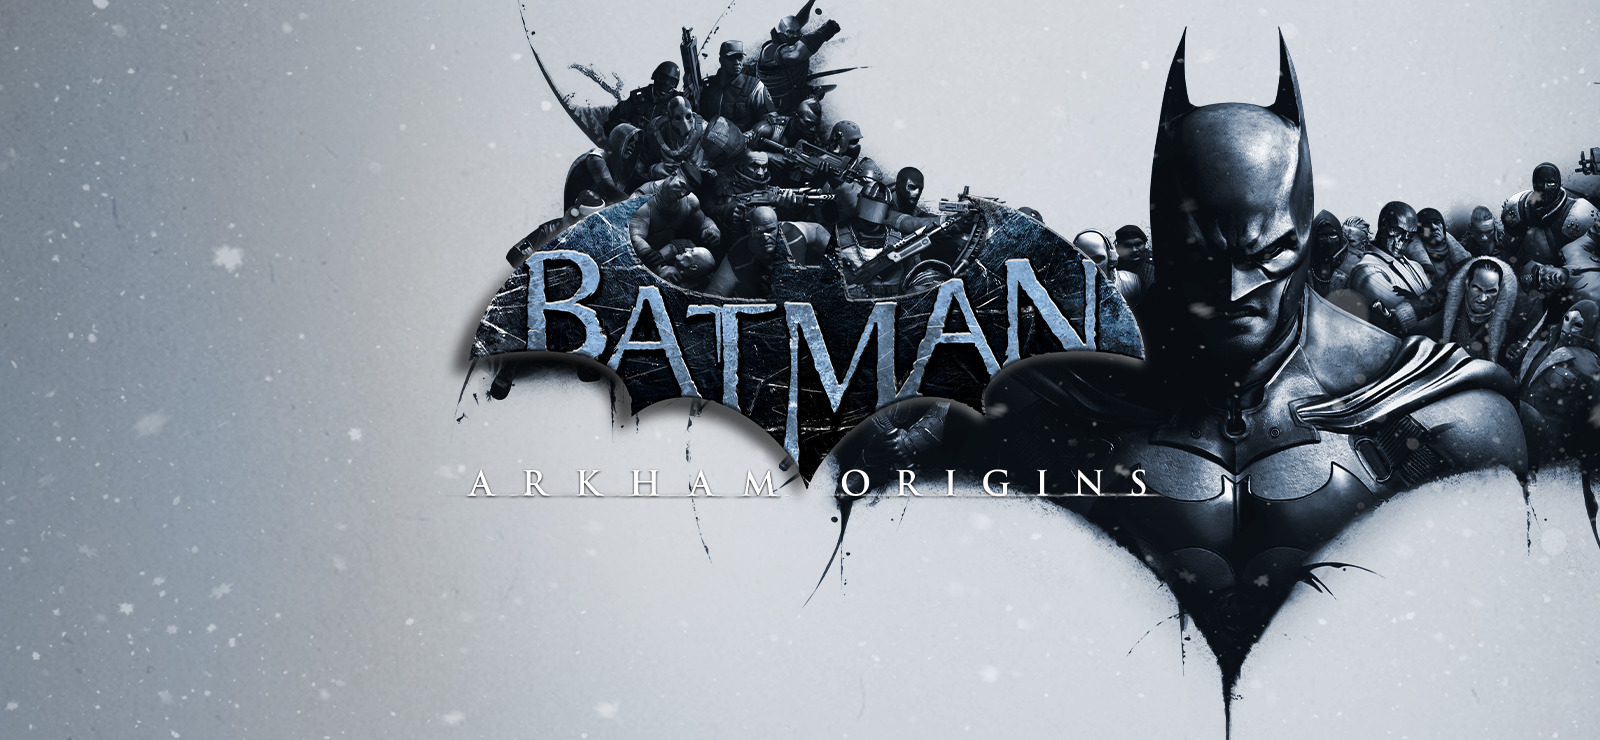 Batman arkham origins multiplayer text chat